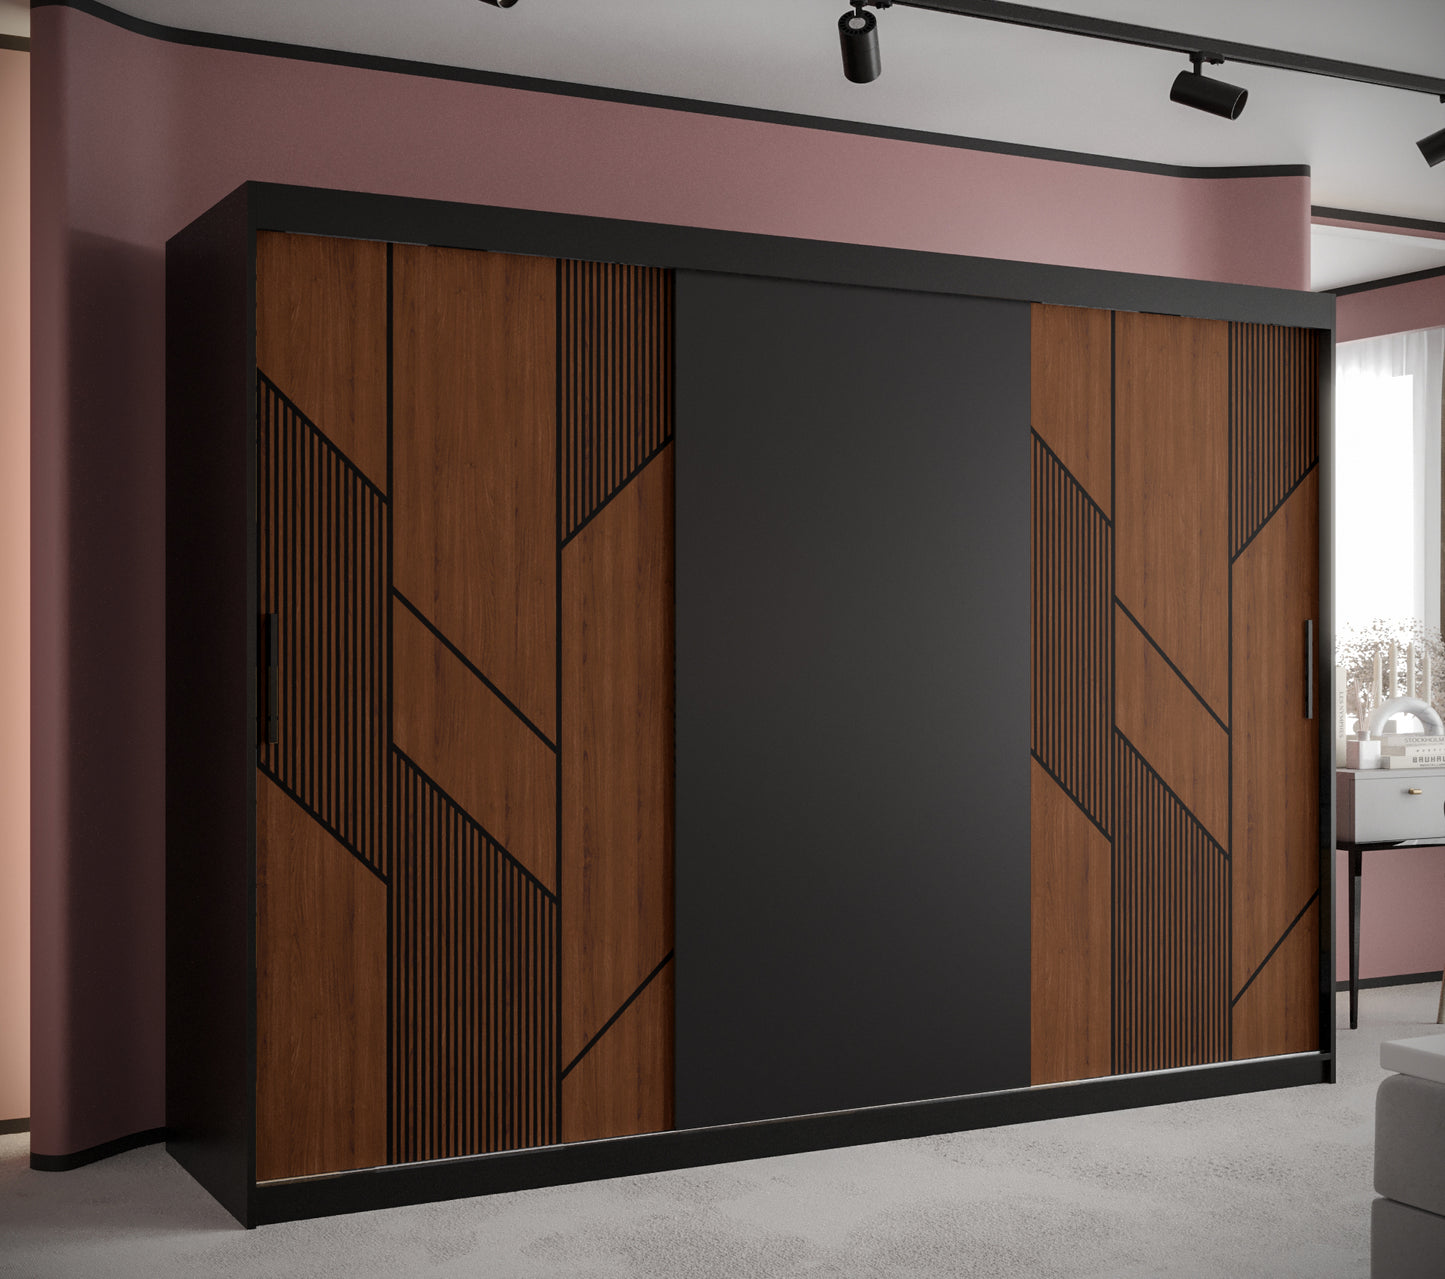 SYDNEY - Wardrobe Sliding Doors Black with Unique Pattern, Shelves, Rails, Drawers Optional, ASSEMBLY INCLUDED>250cm<